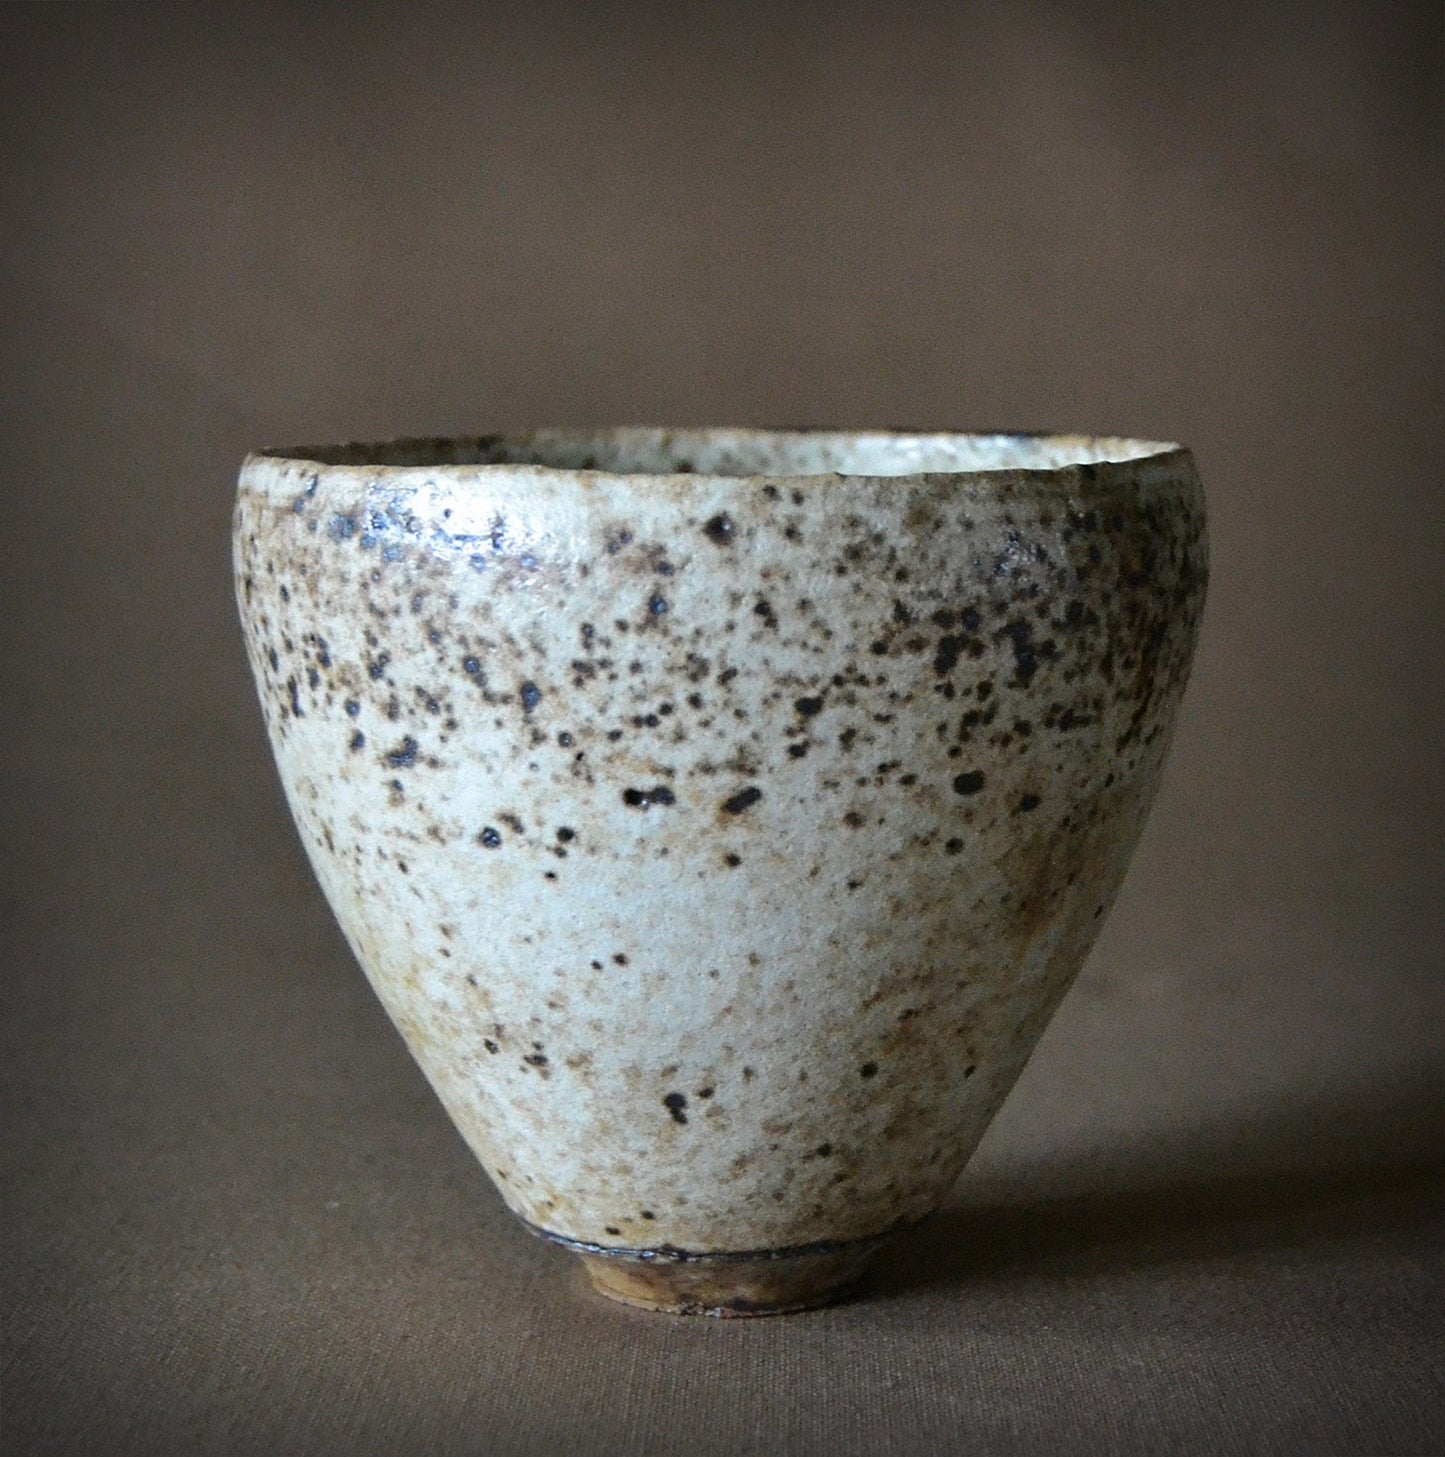 Chawan Ceramic Tea Cup No. 9 by Propeler Studio Tea Cup